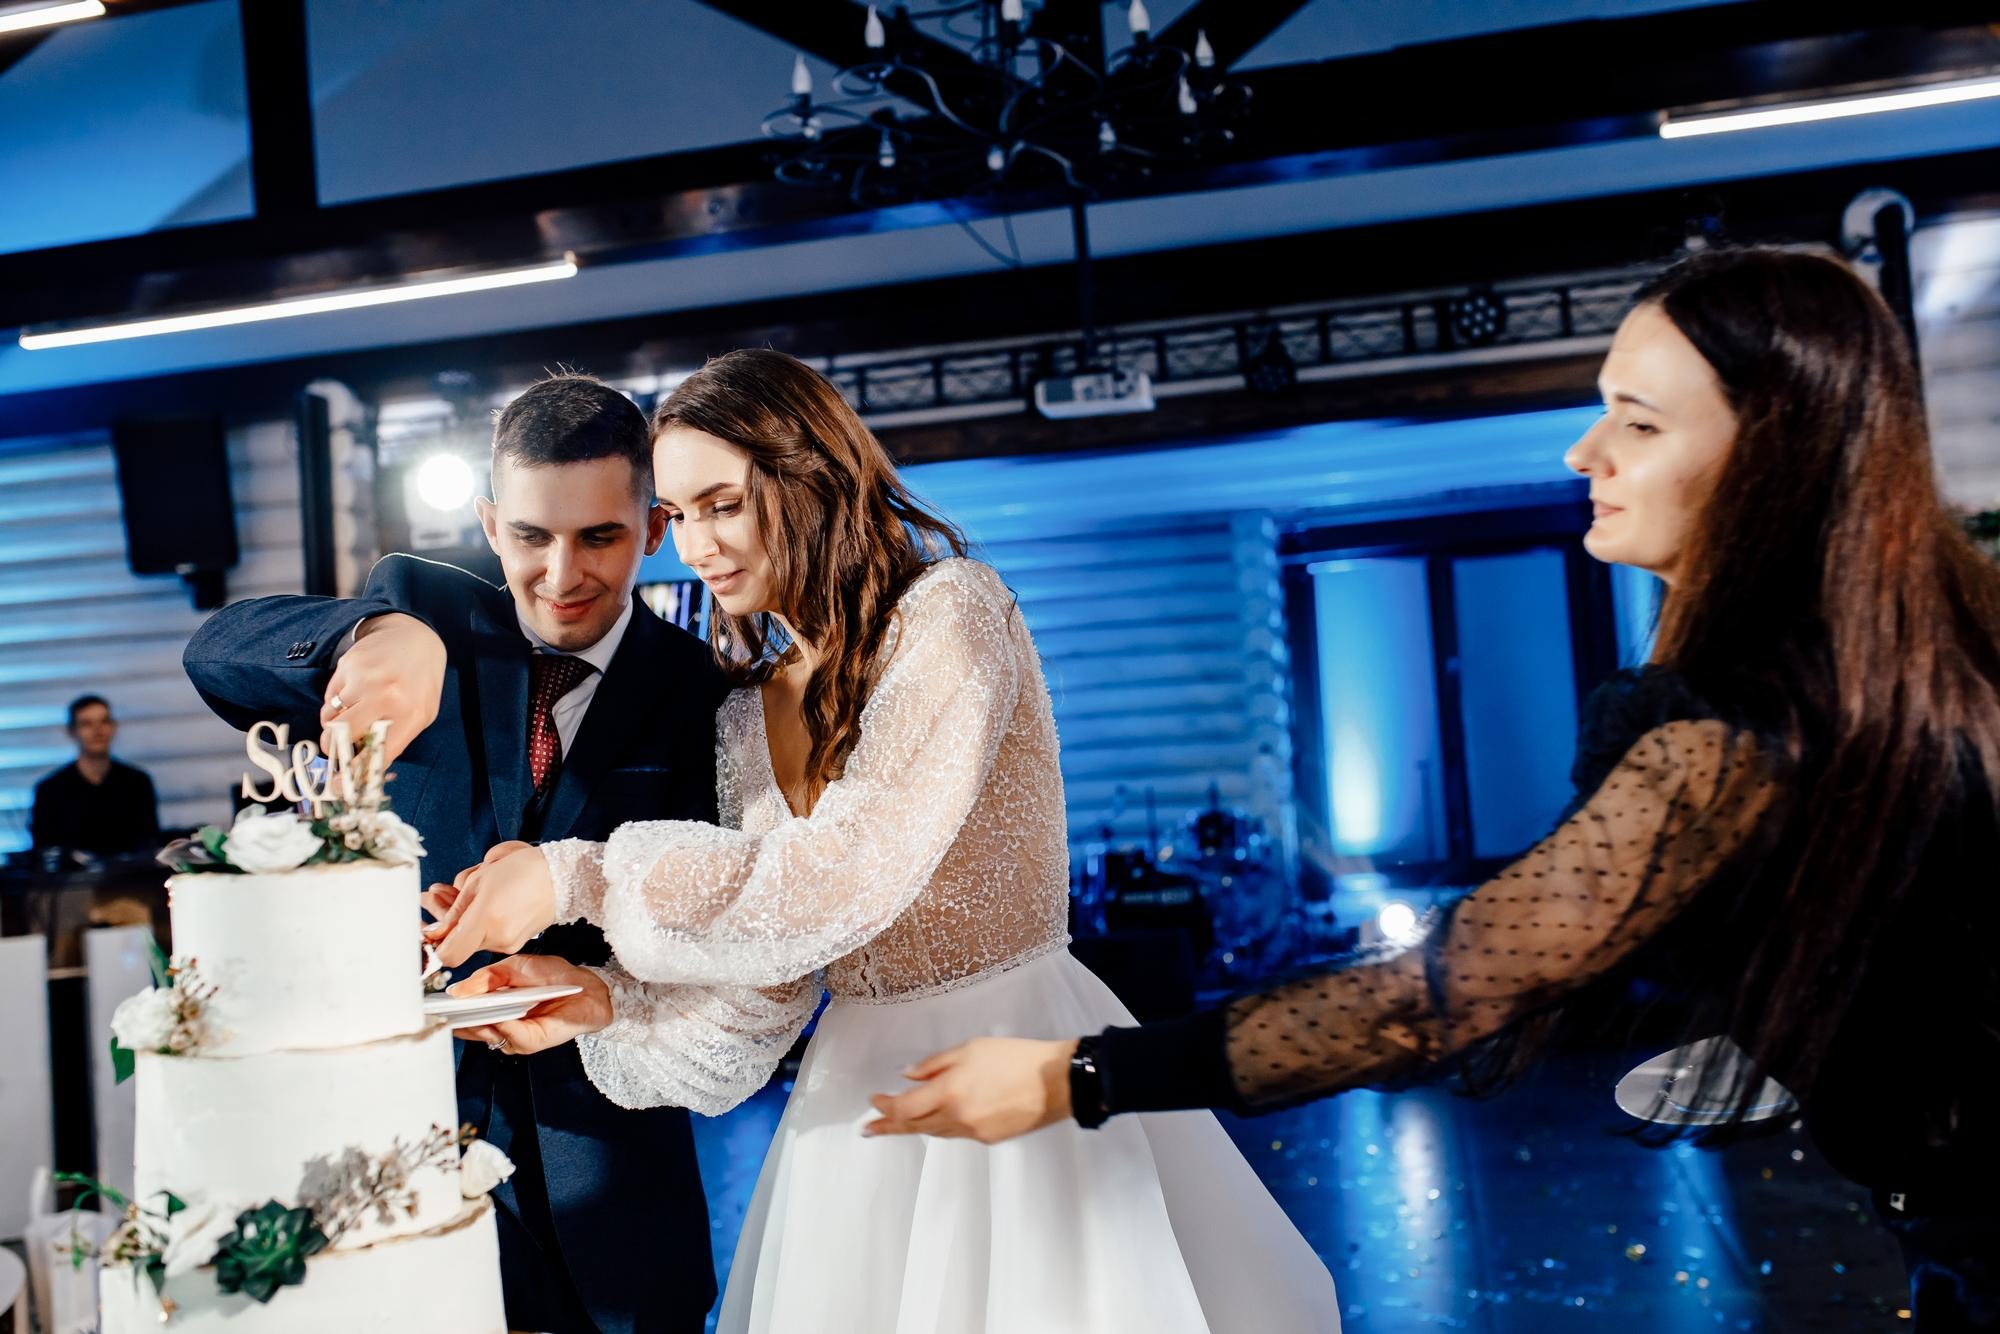 разрезать торт на свадьбе